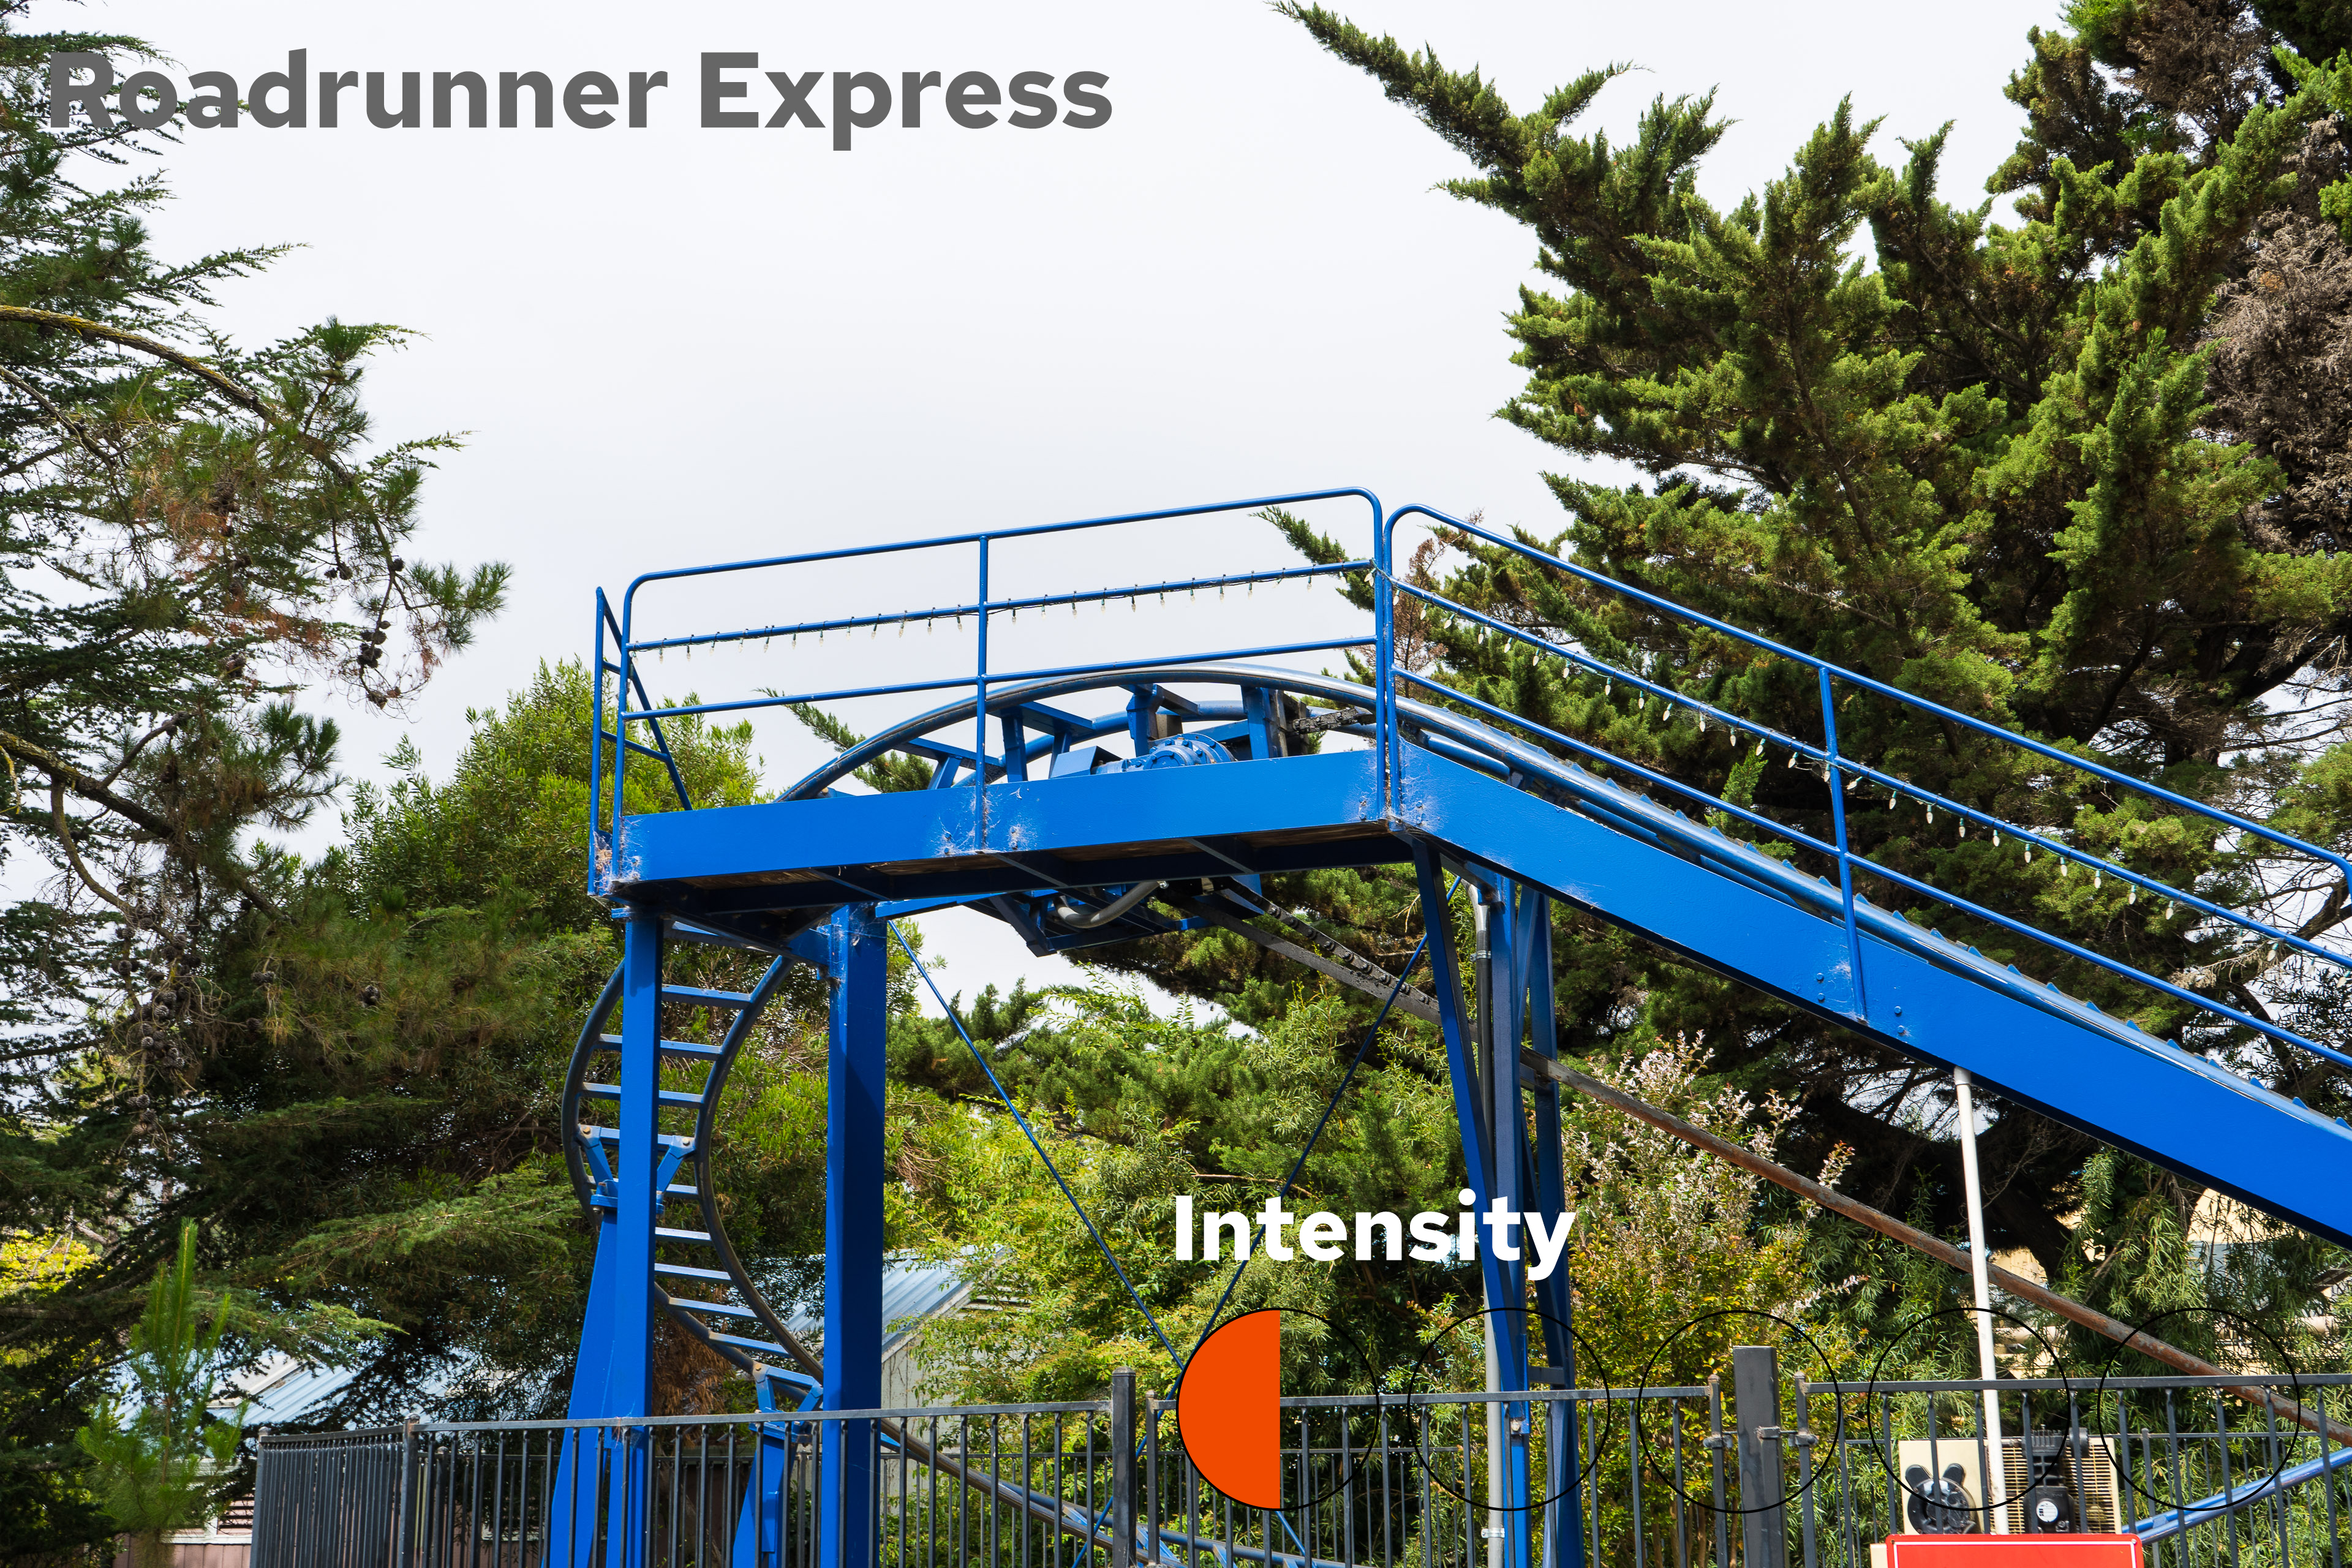 Roadrunner Express Intensity